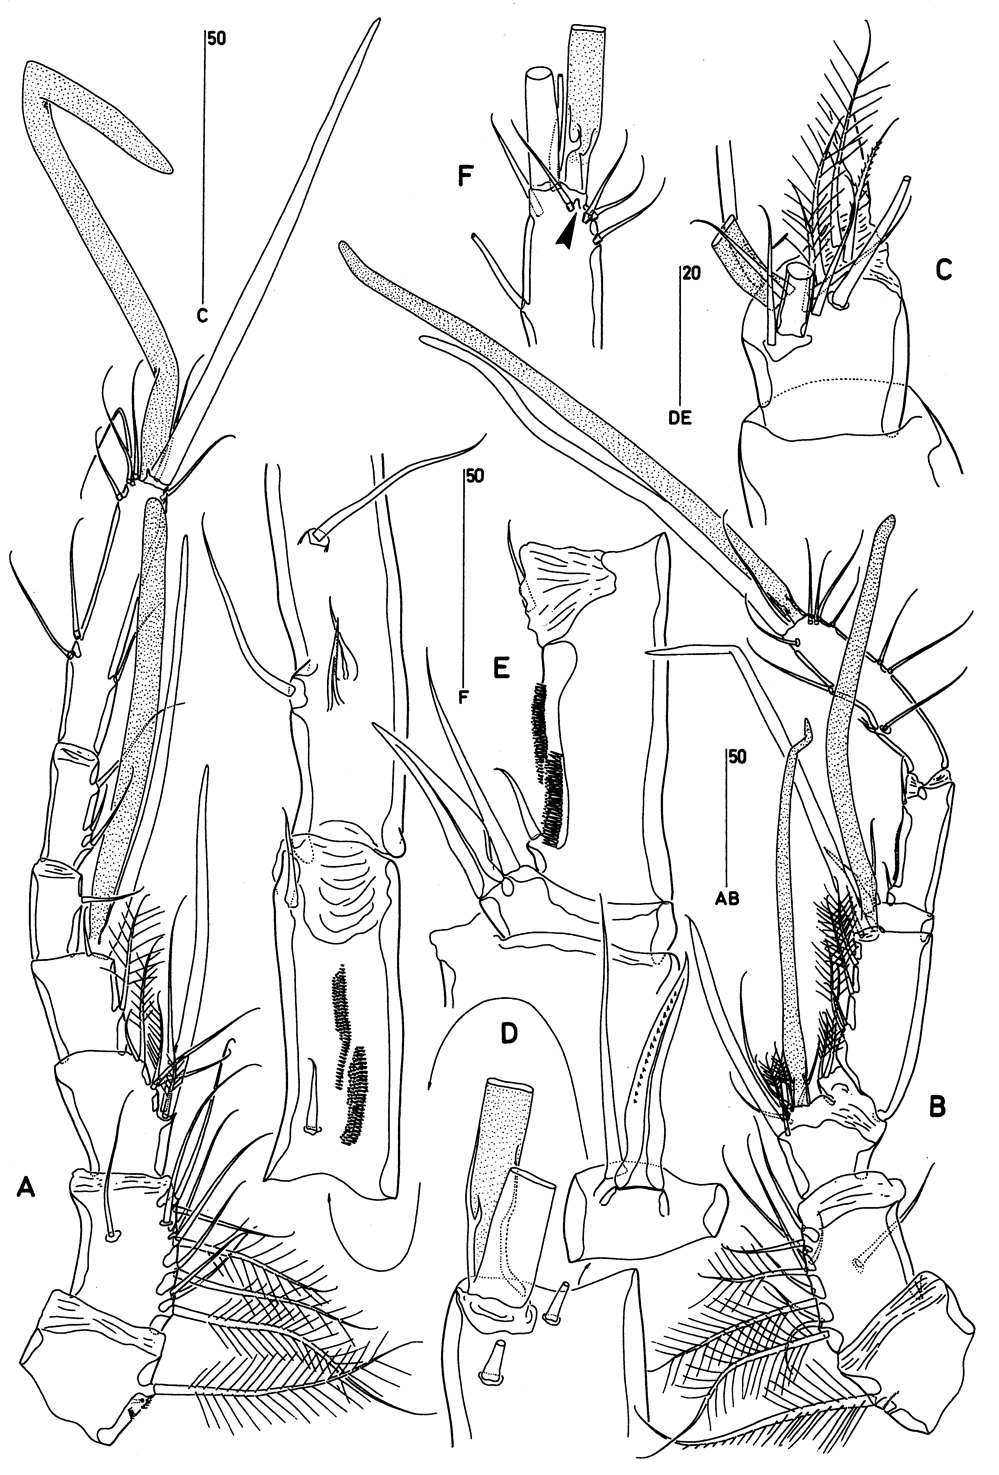 Species Clytemnestra scutellata - Plate 2 of morphological figures